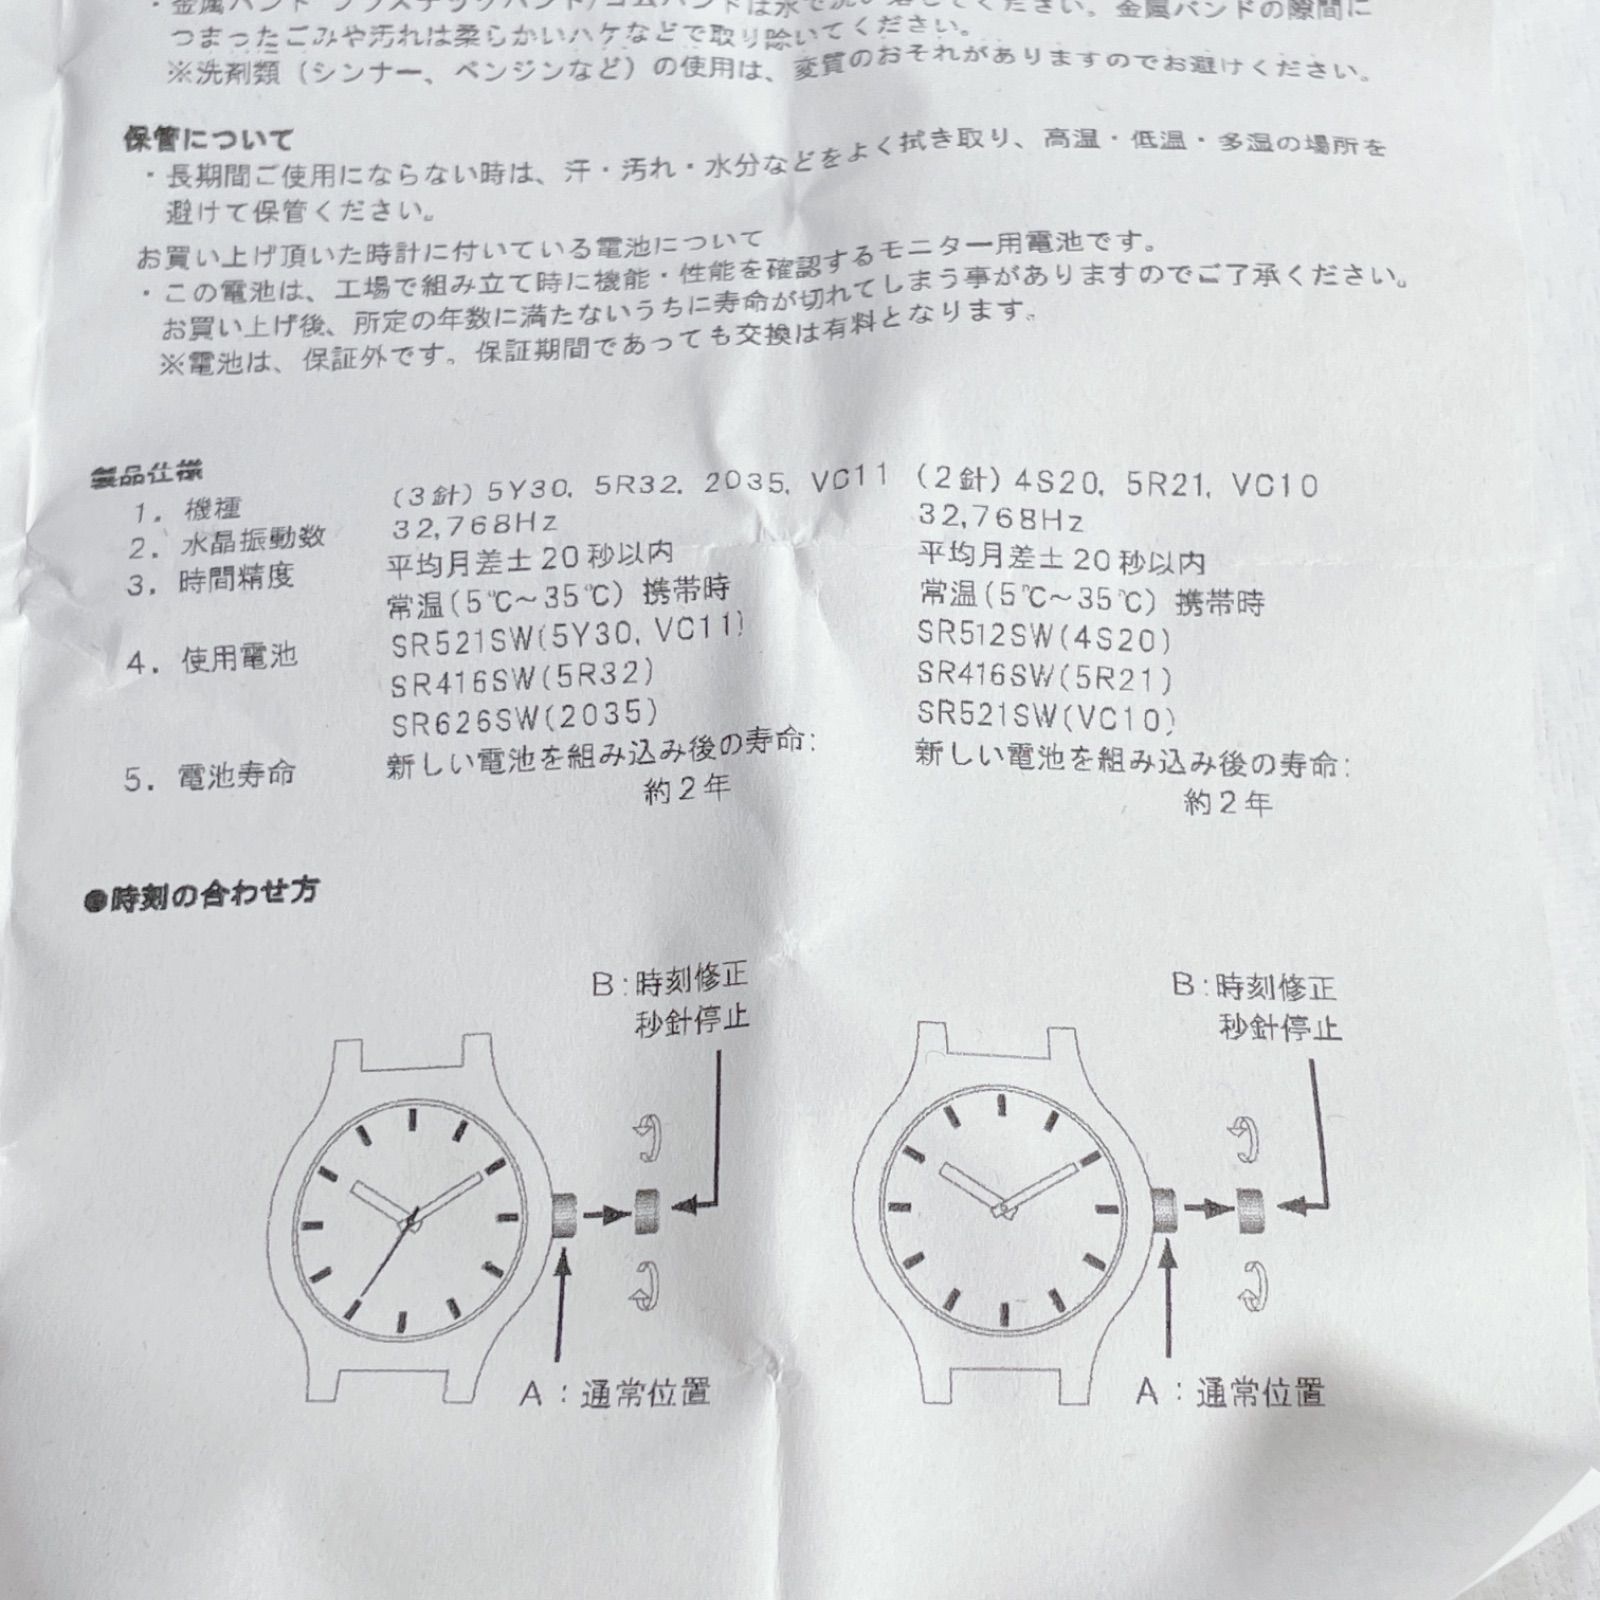 SPICA スピカ　腕時計 ゴールドシルバー SPI55-COM/M